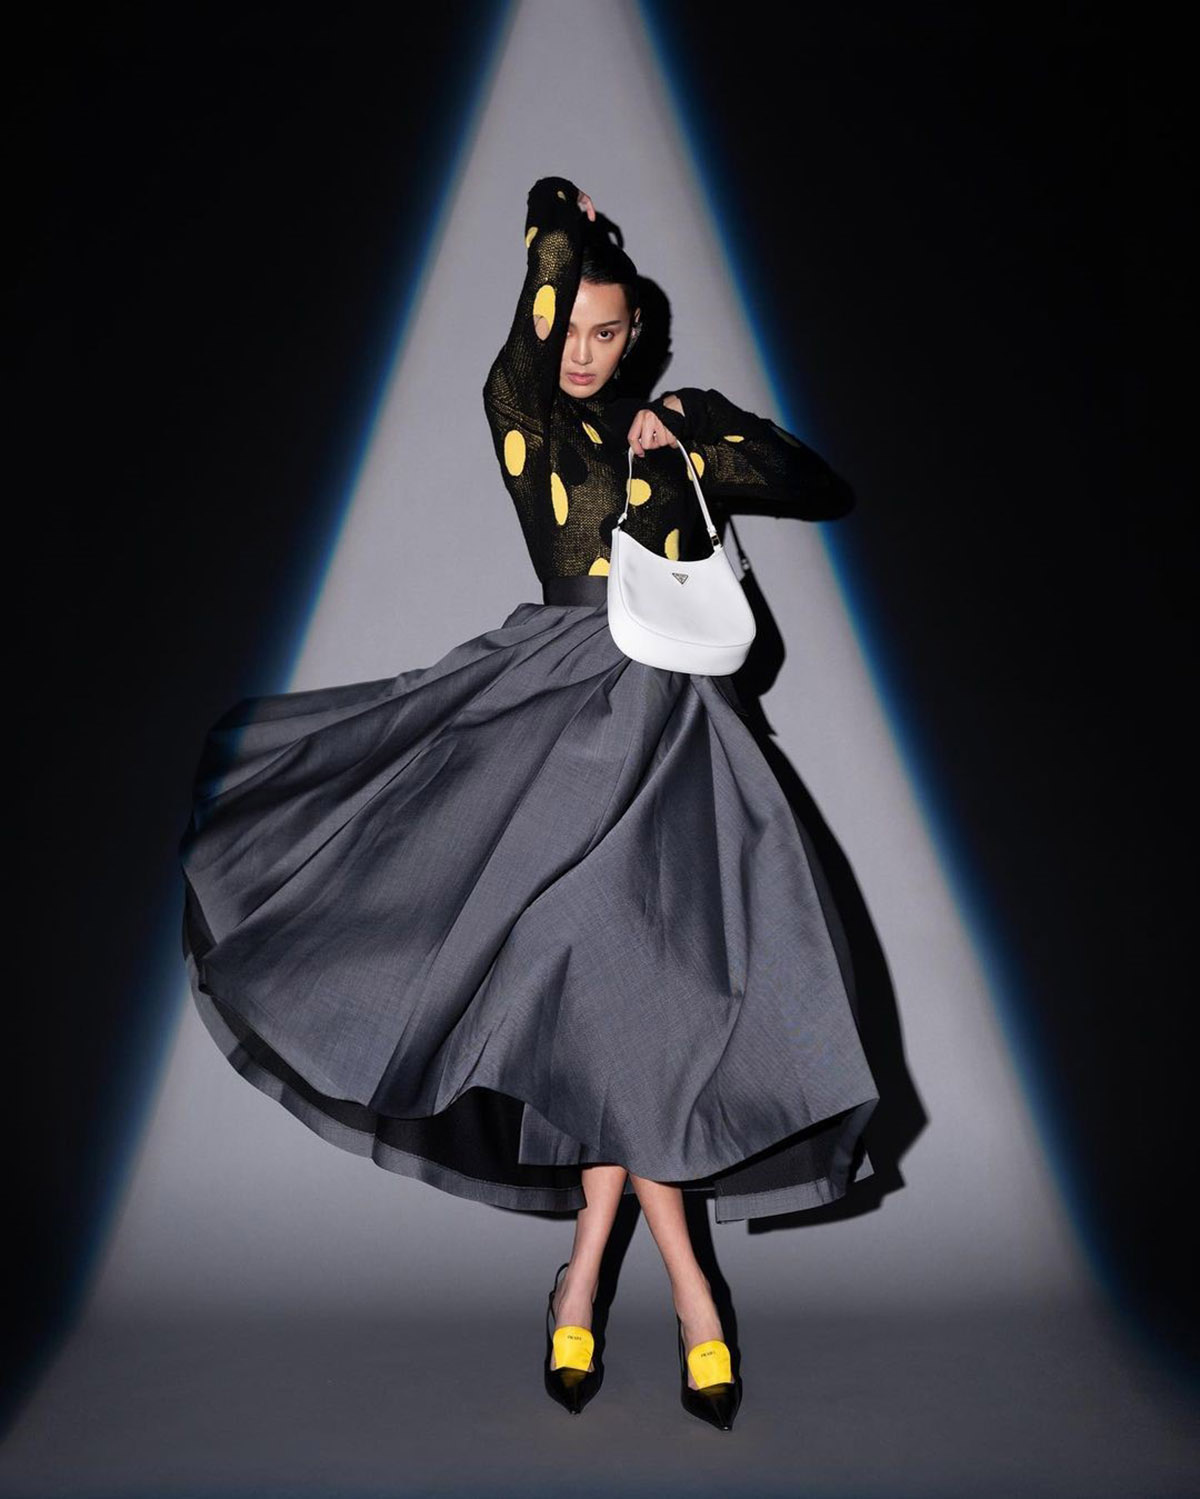 Kiwi Lee Han by Joshua Lin for Vogue Taiwan March 2021